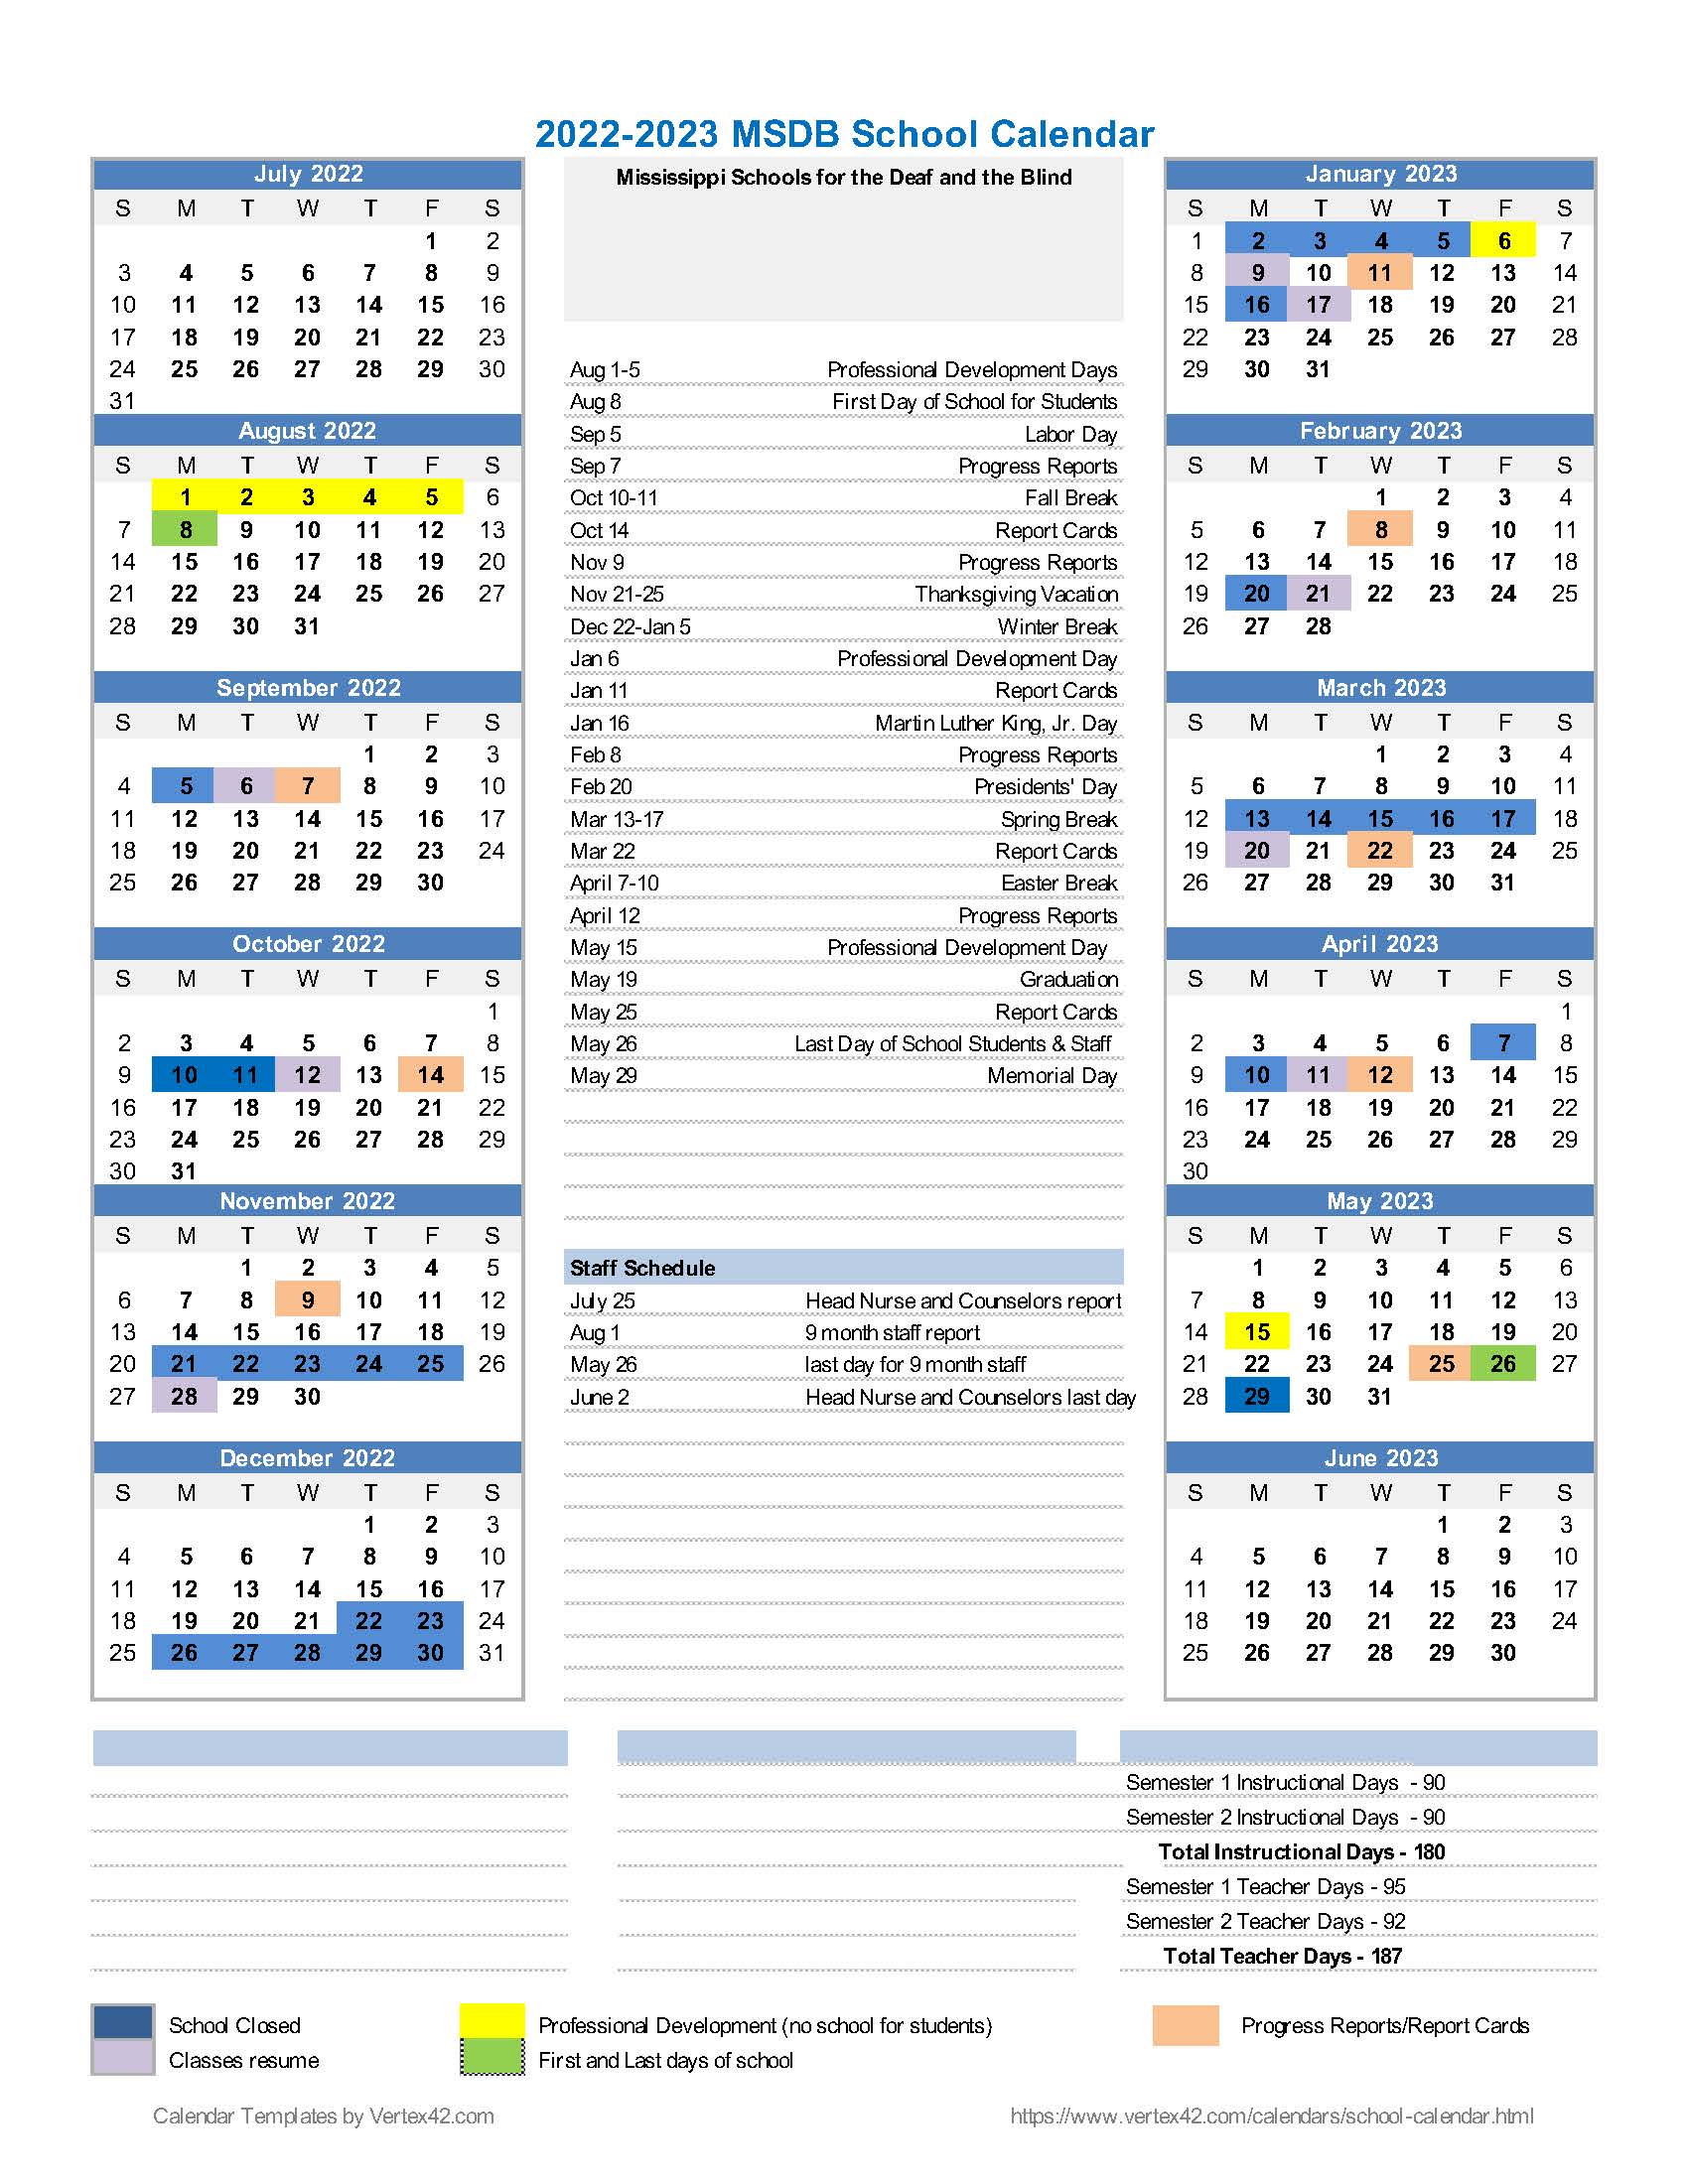 22-23 MSDB School Calendar JS Revised 5.26.22